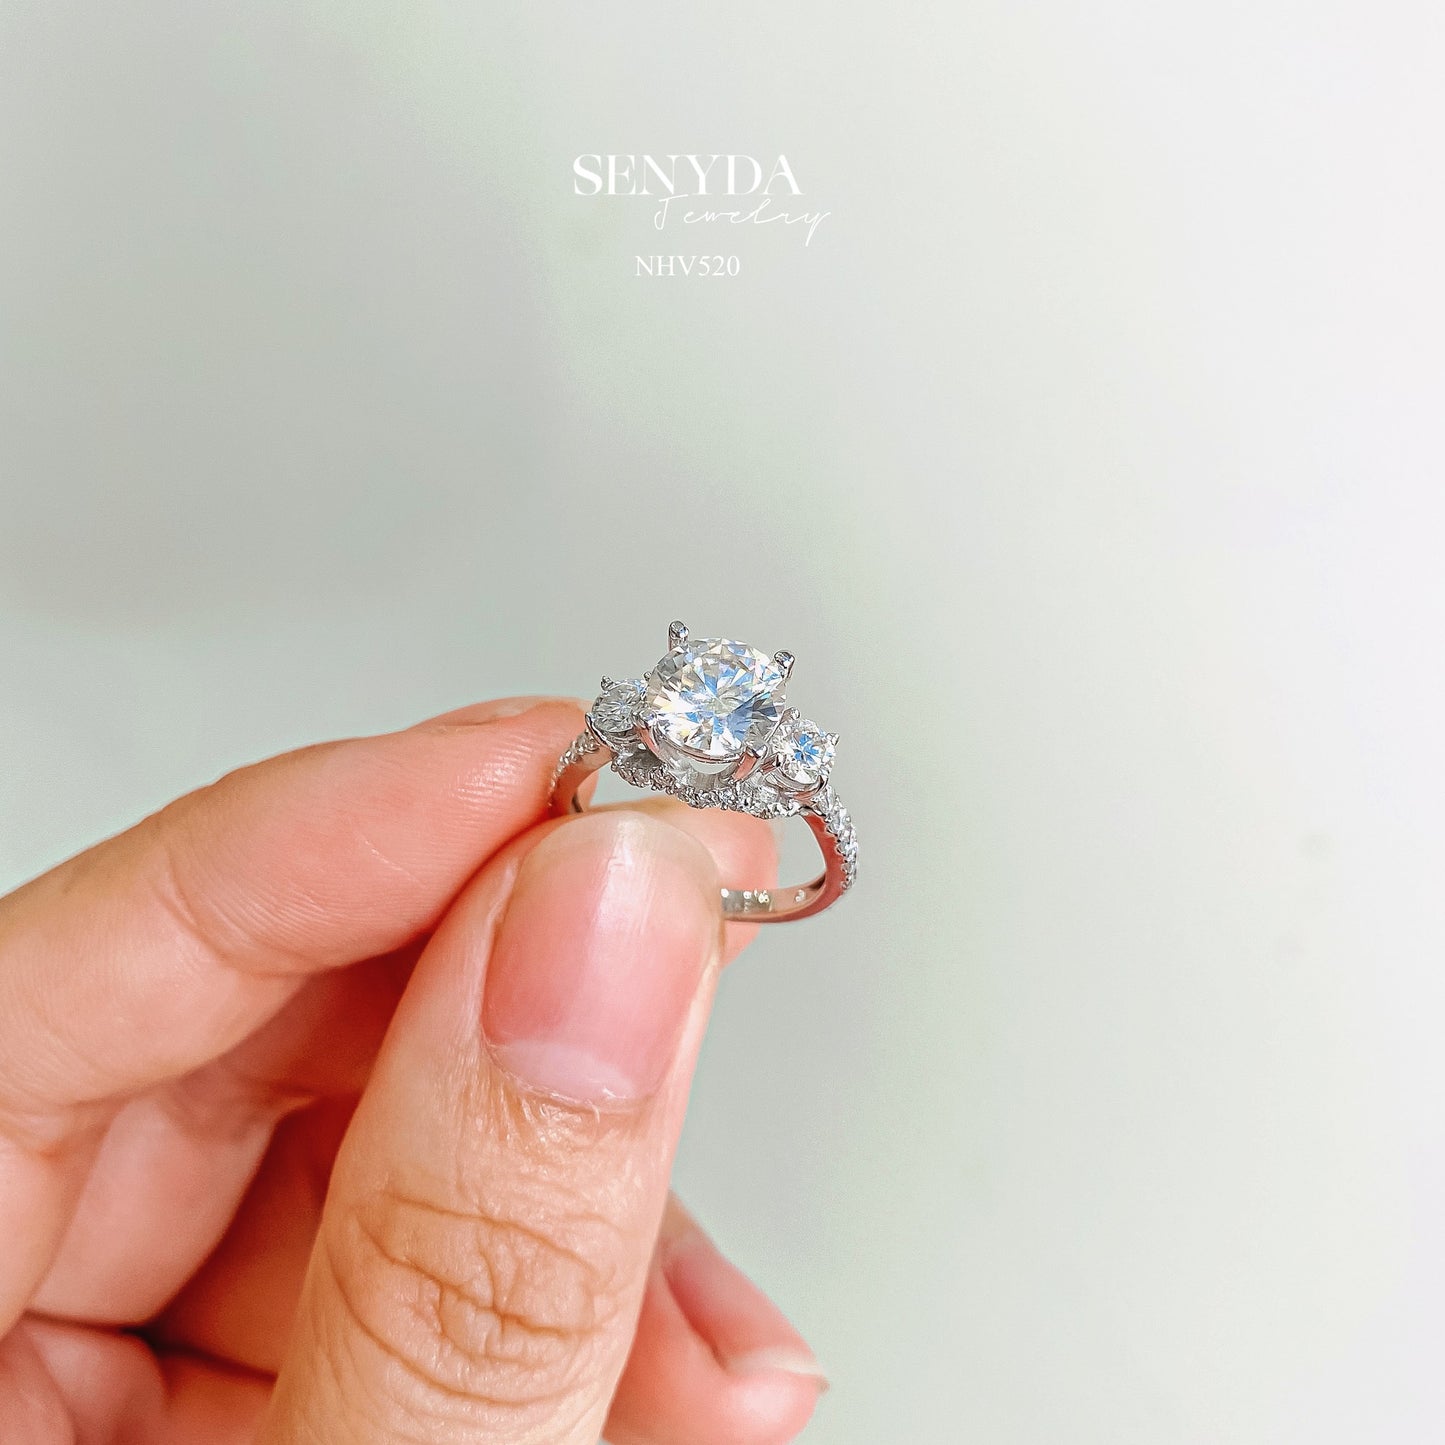 Senyda 10K Solid Gold Special Ring - "THE ATLANTIS" RING